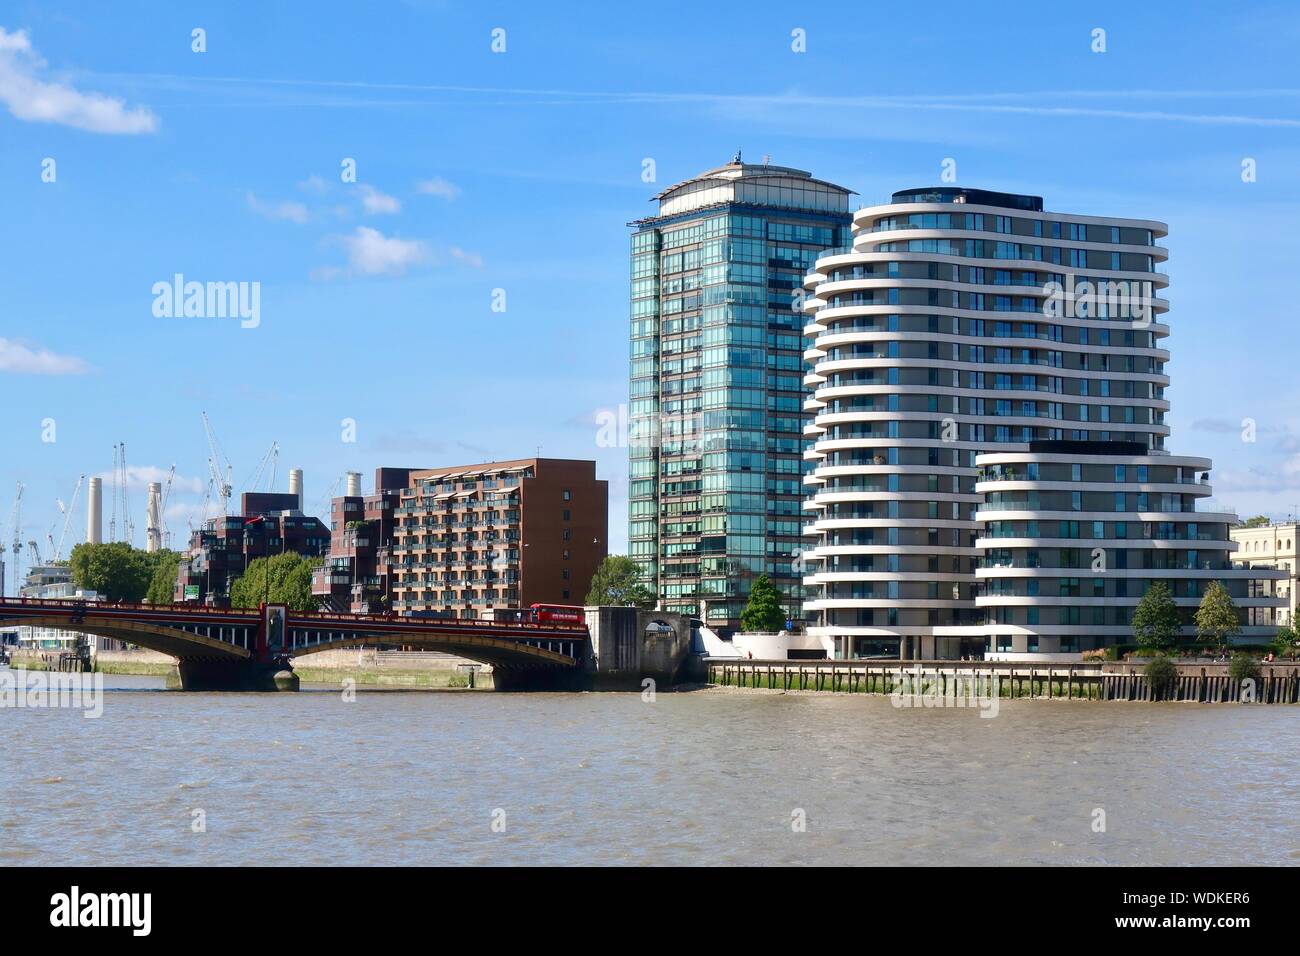 London, UK - 29 August 2019: Riverside apartments on Millbank facing Vauxhall Bridge. Stock Photo